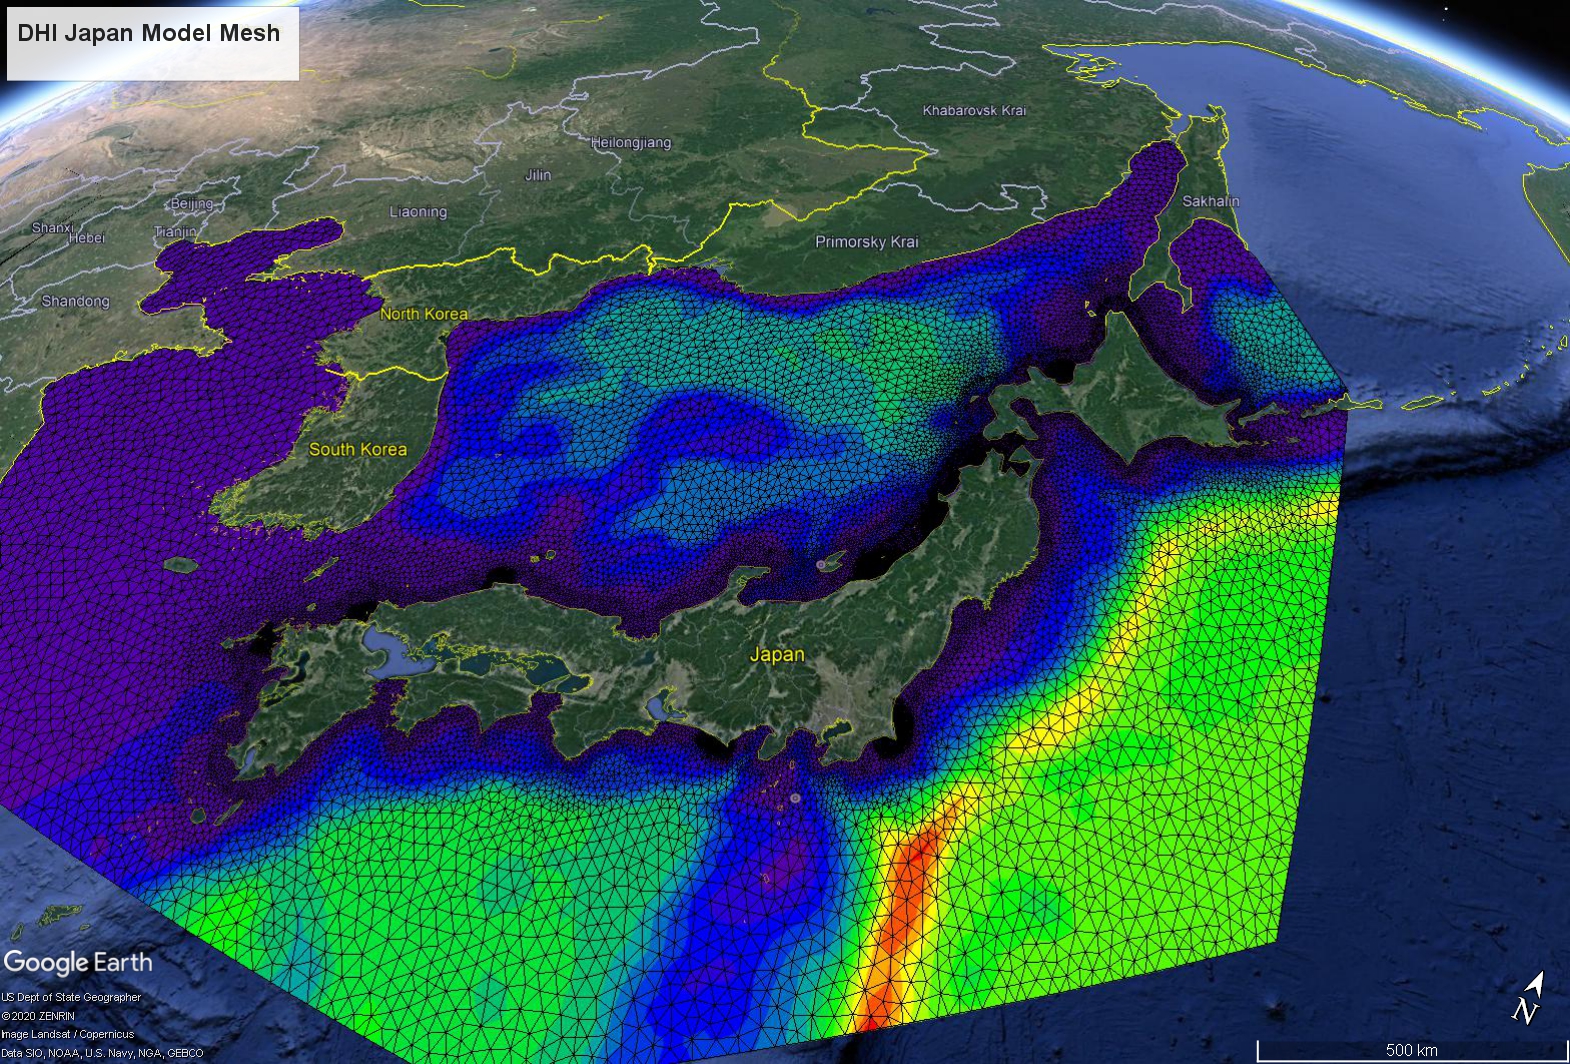 Image showing Japan model mesh based on DHI metocean data